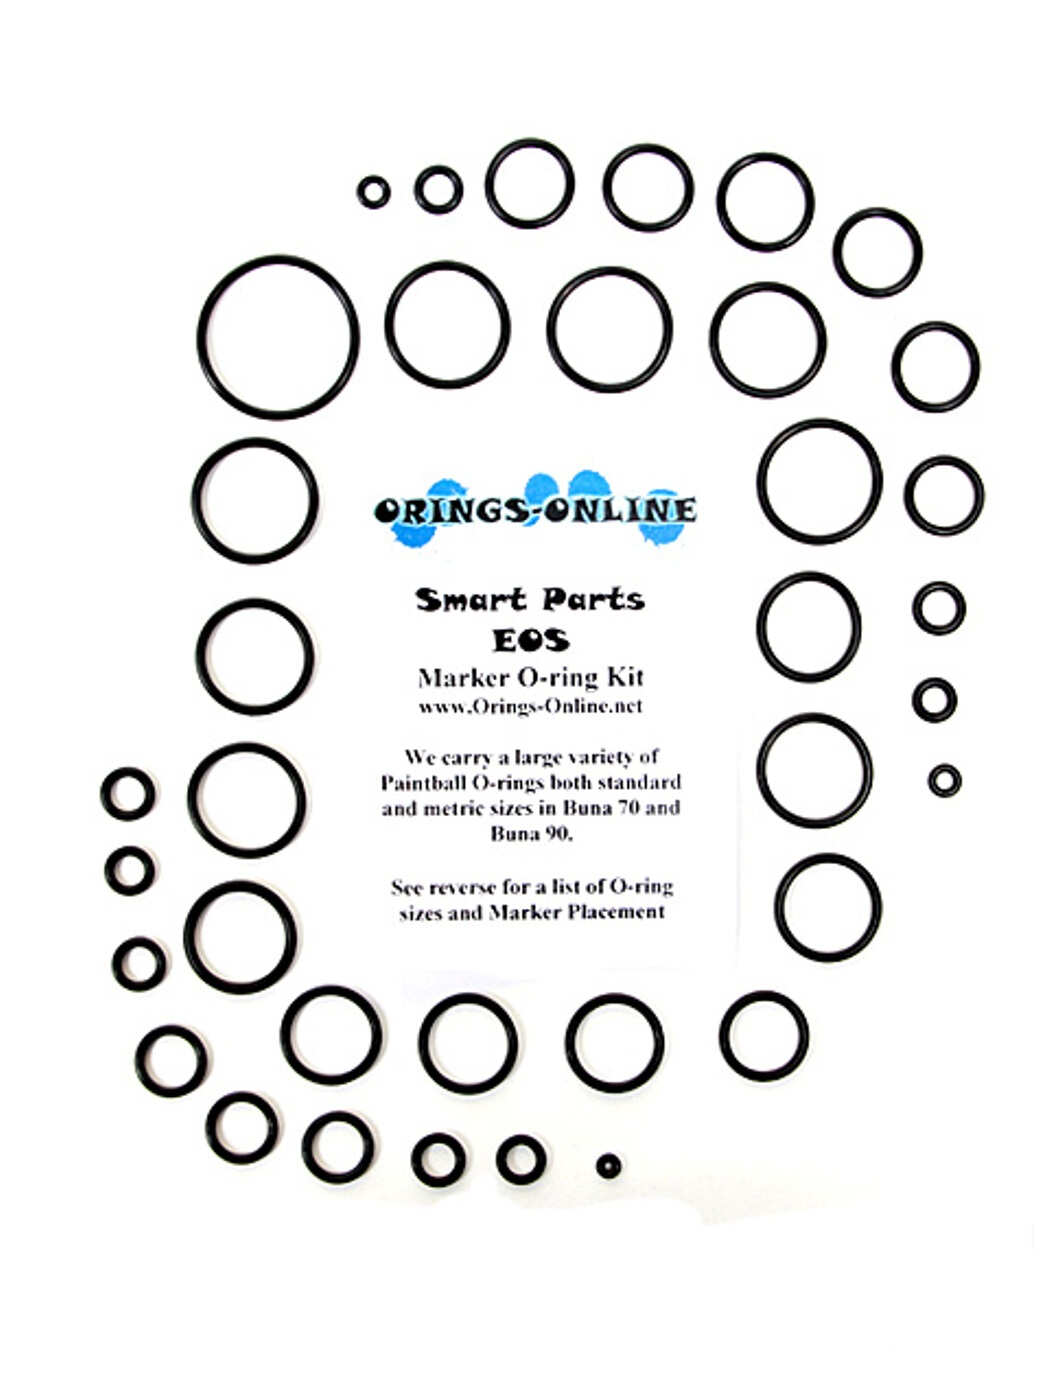 Smart Parts EOS Marker O-ring Kit